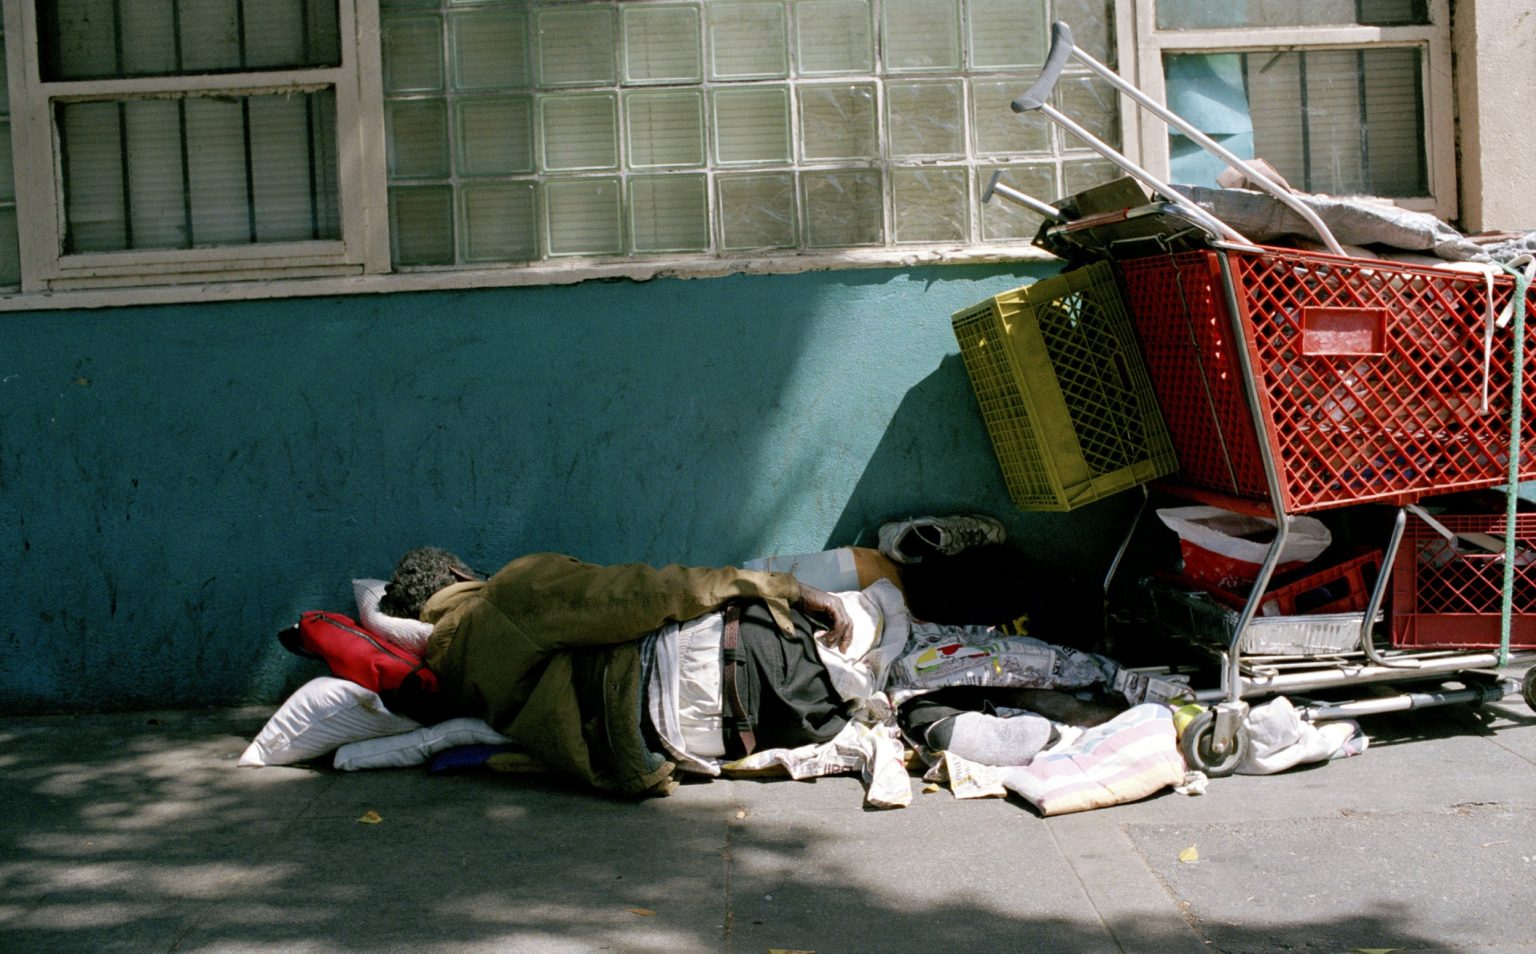 Los Angeles 2004 - Skid Row  - Homeless in San Pedro Street *** Local Caption *** 00216063